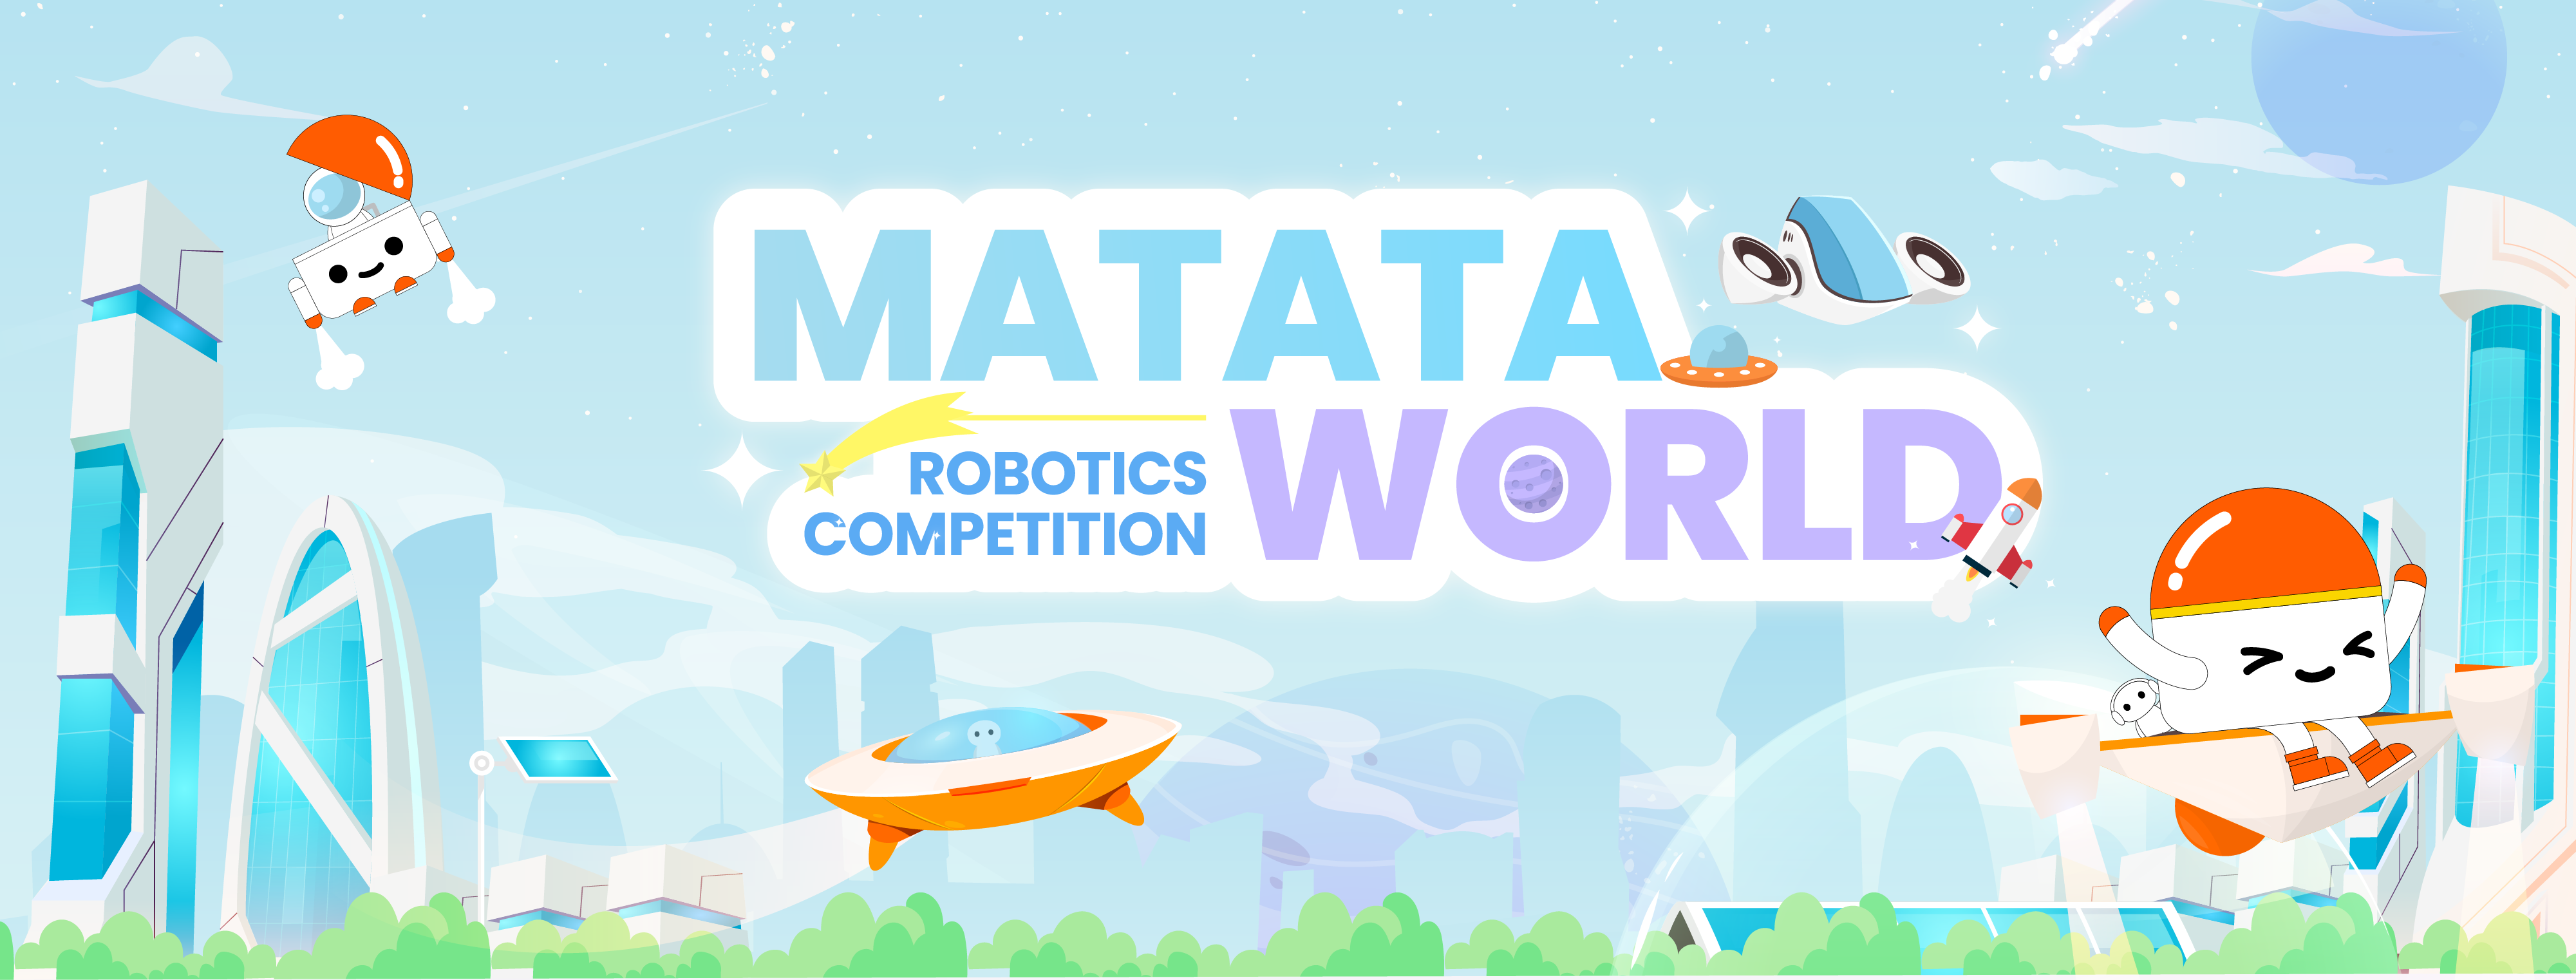 Matatalab MatataWorld Robotics Competition